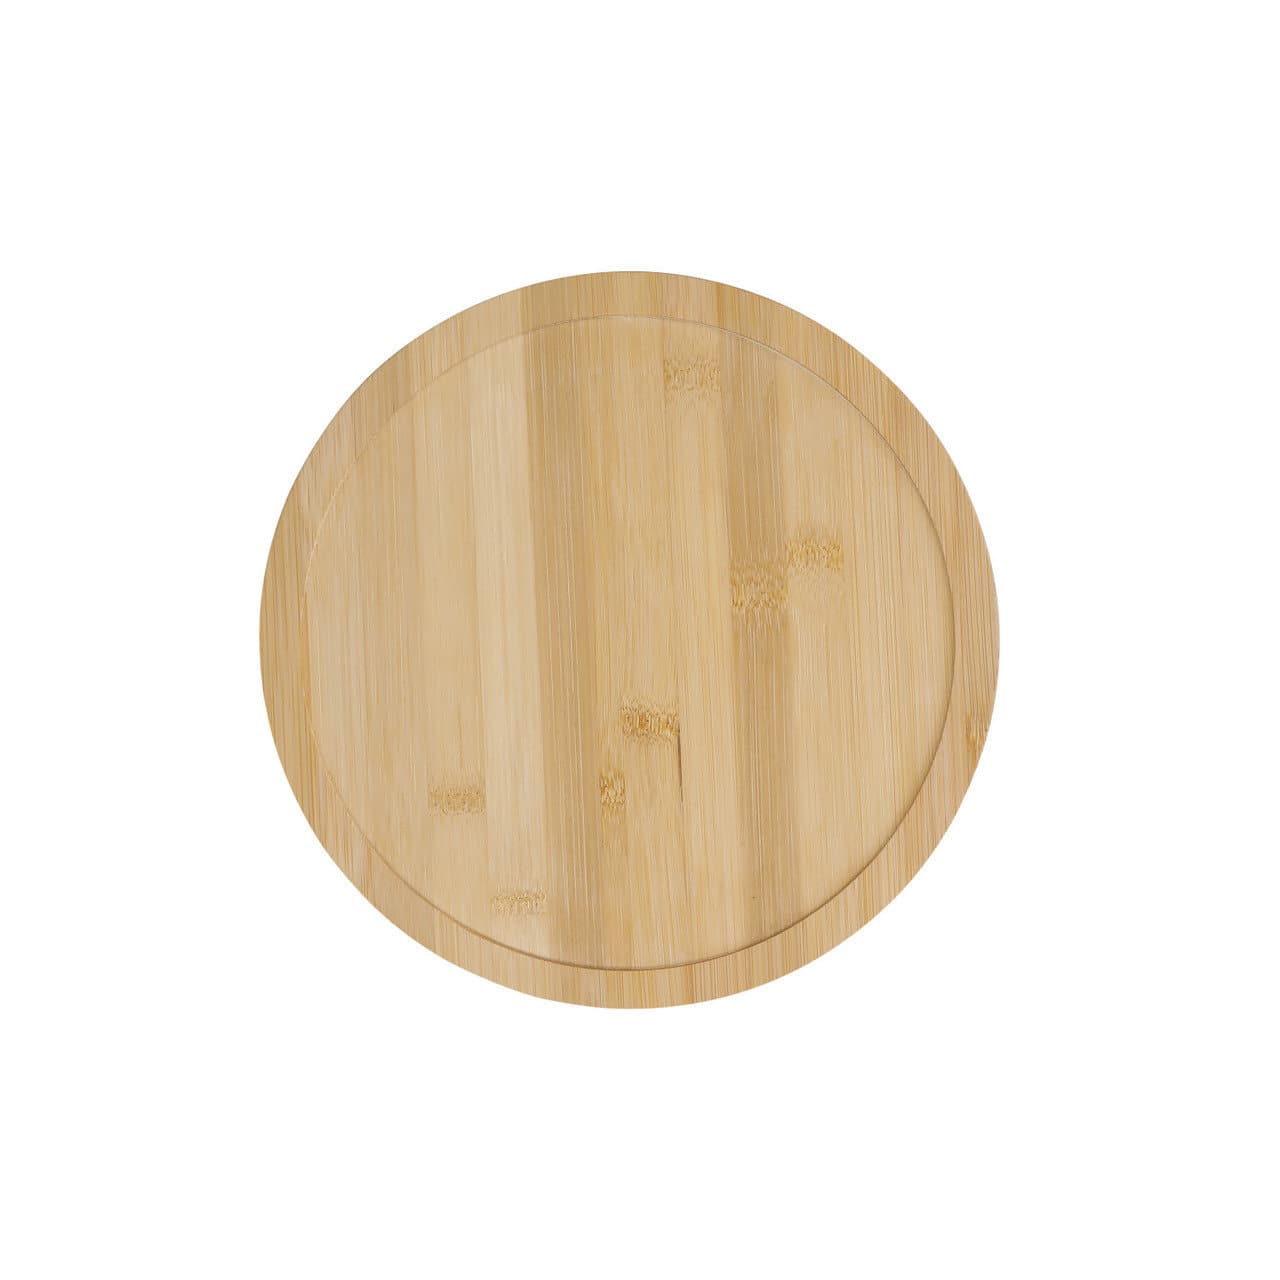 COPCO_Bamboo_Lazy_Susan_Organiser-diameter_25cm